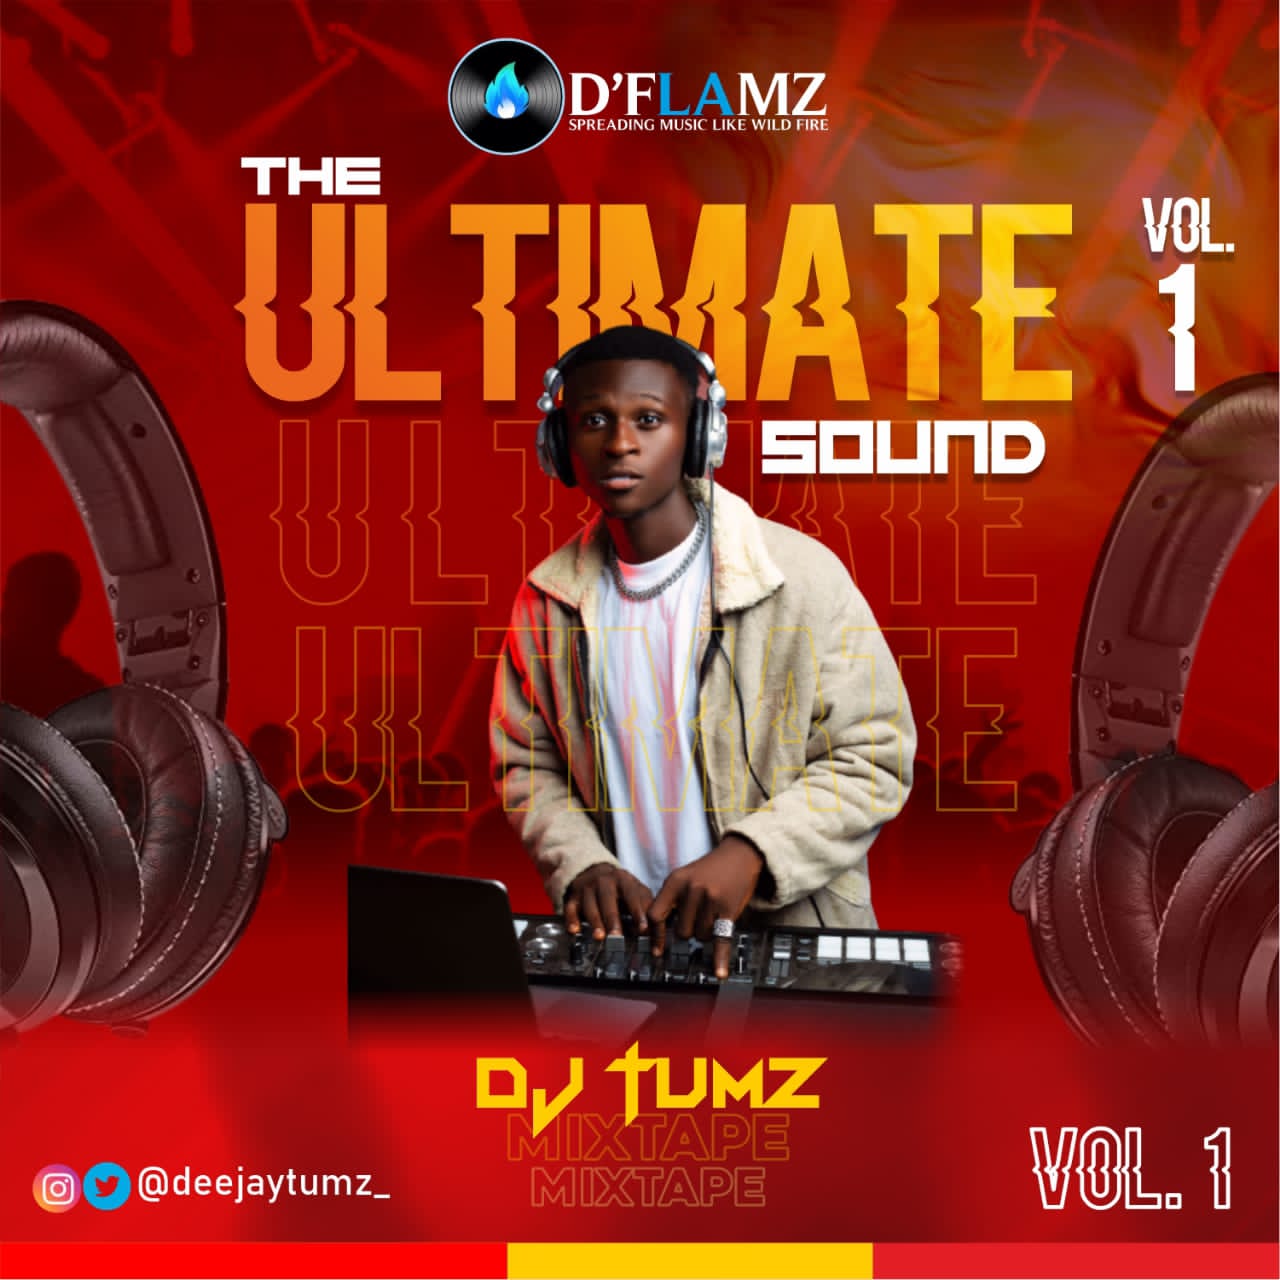 D’FLAMZ signee DJ TUMZ drops debut mixtape titled ‘THE ULTIMATE SOUND VOL 1.